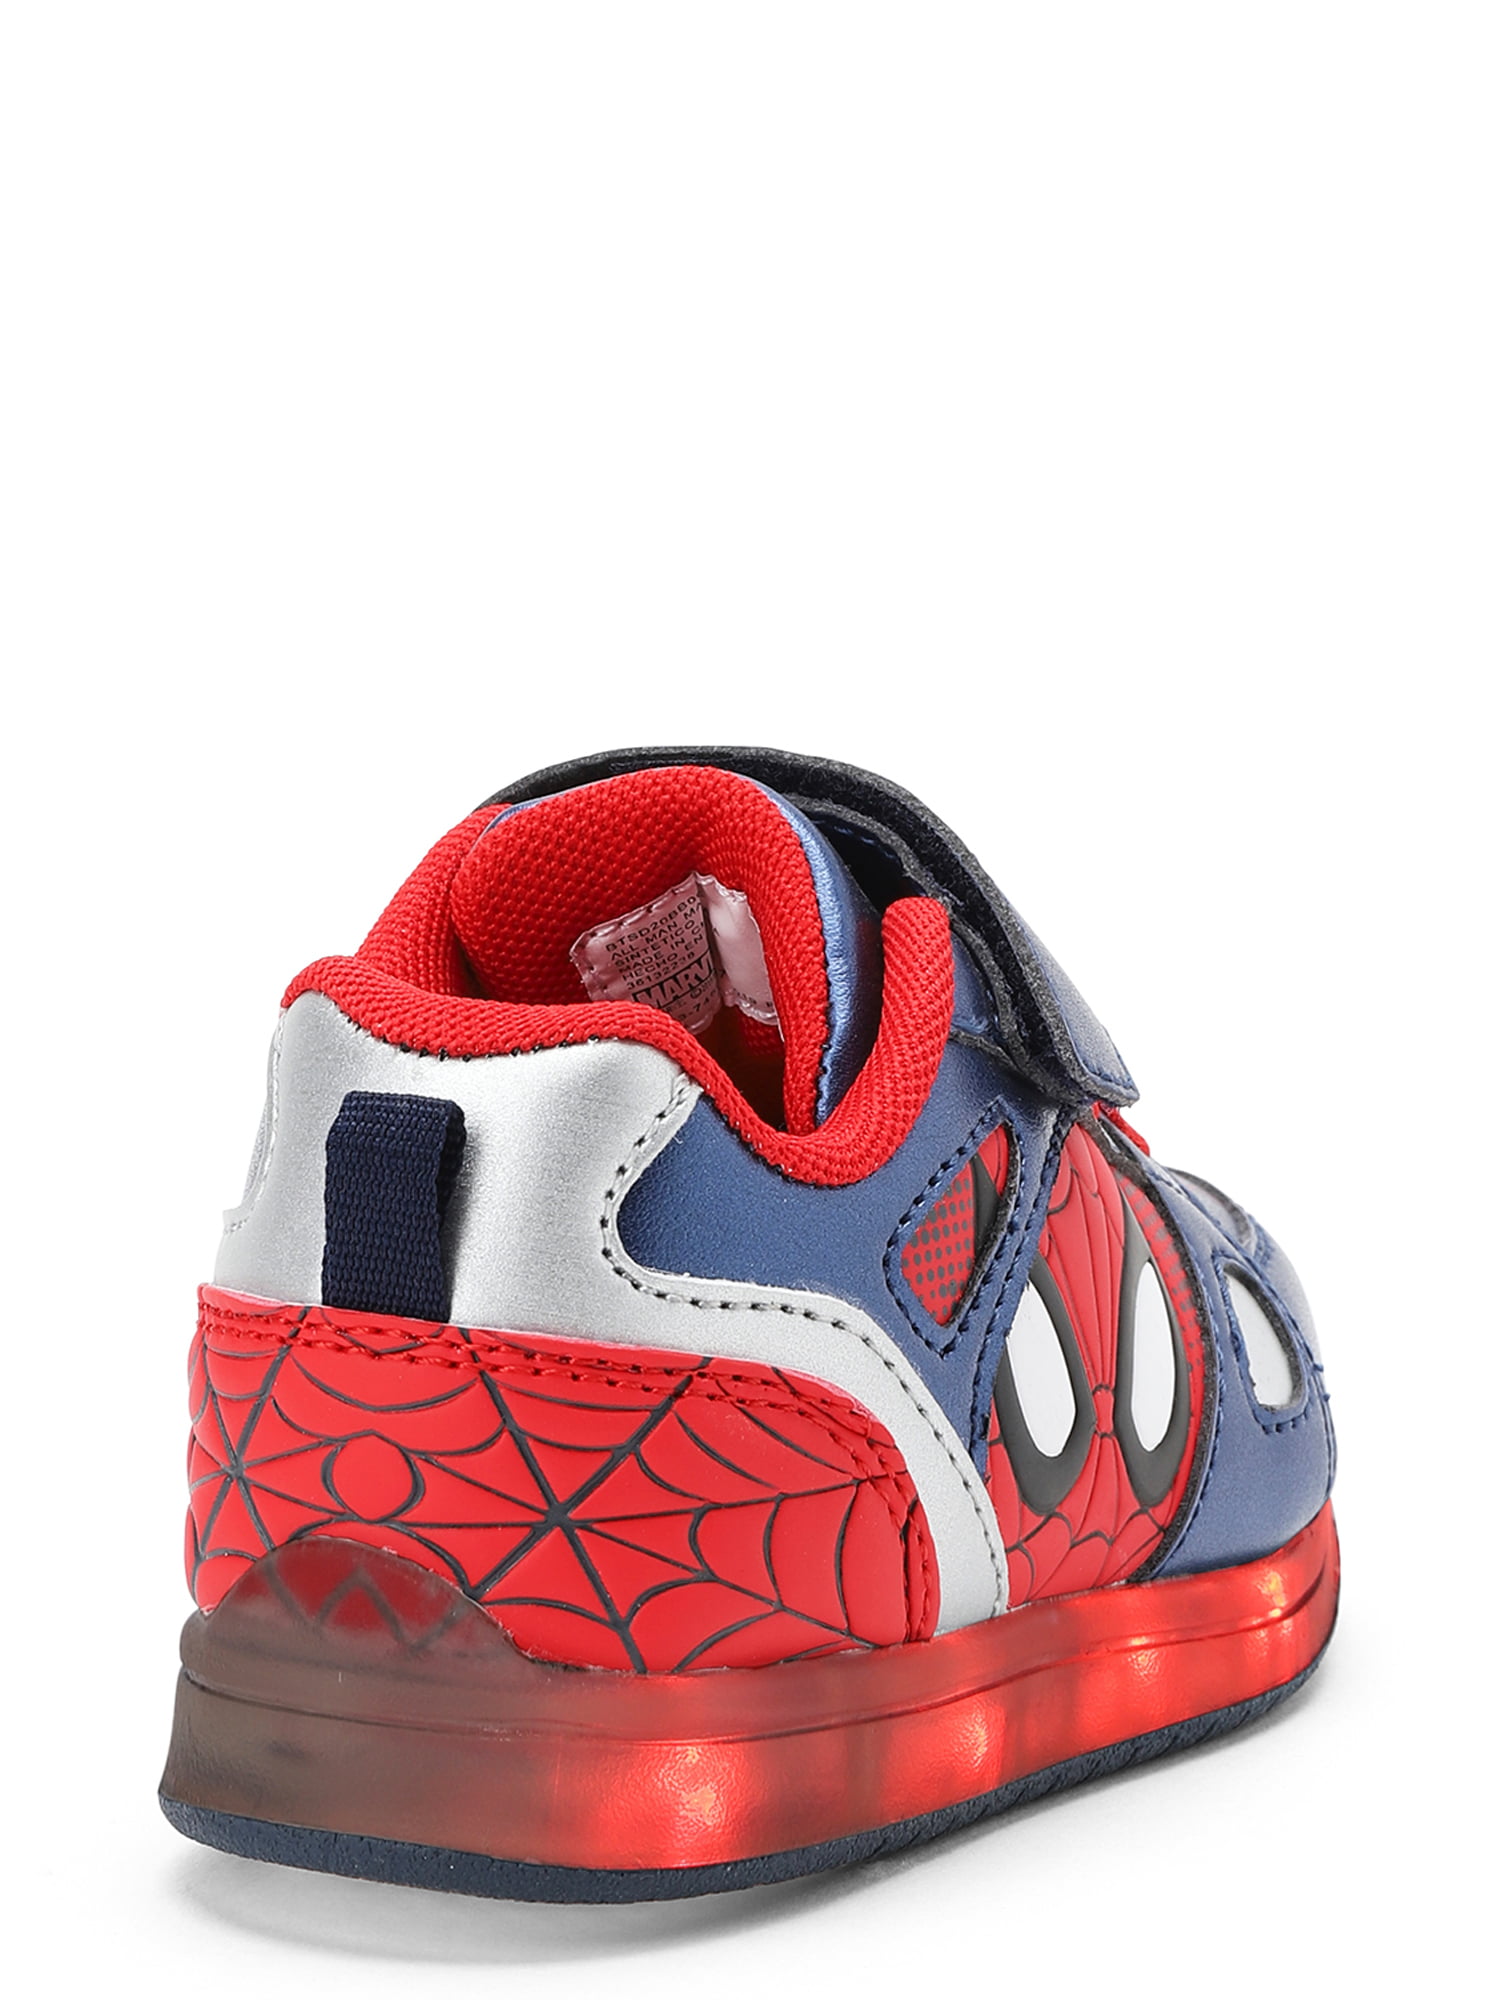 spiderman light up shoes walmart